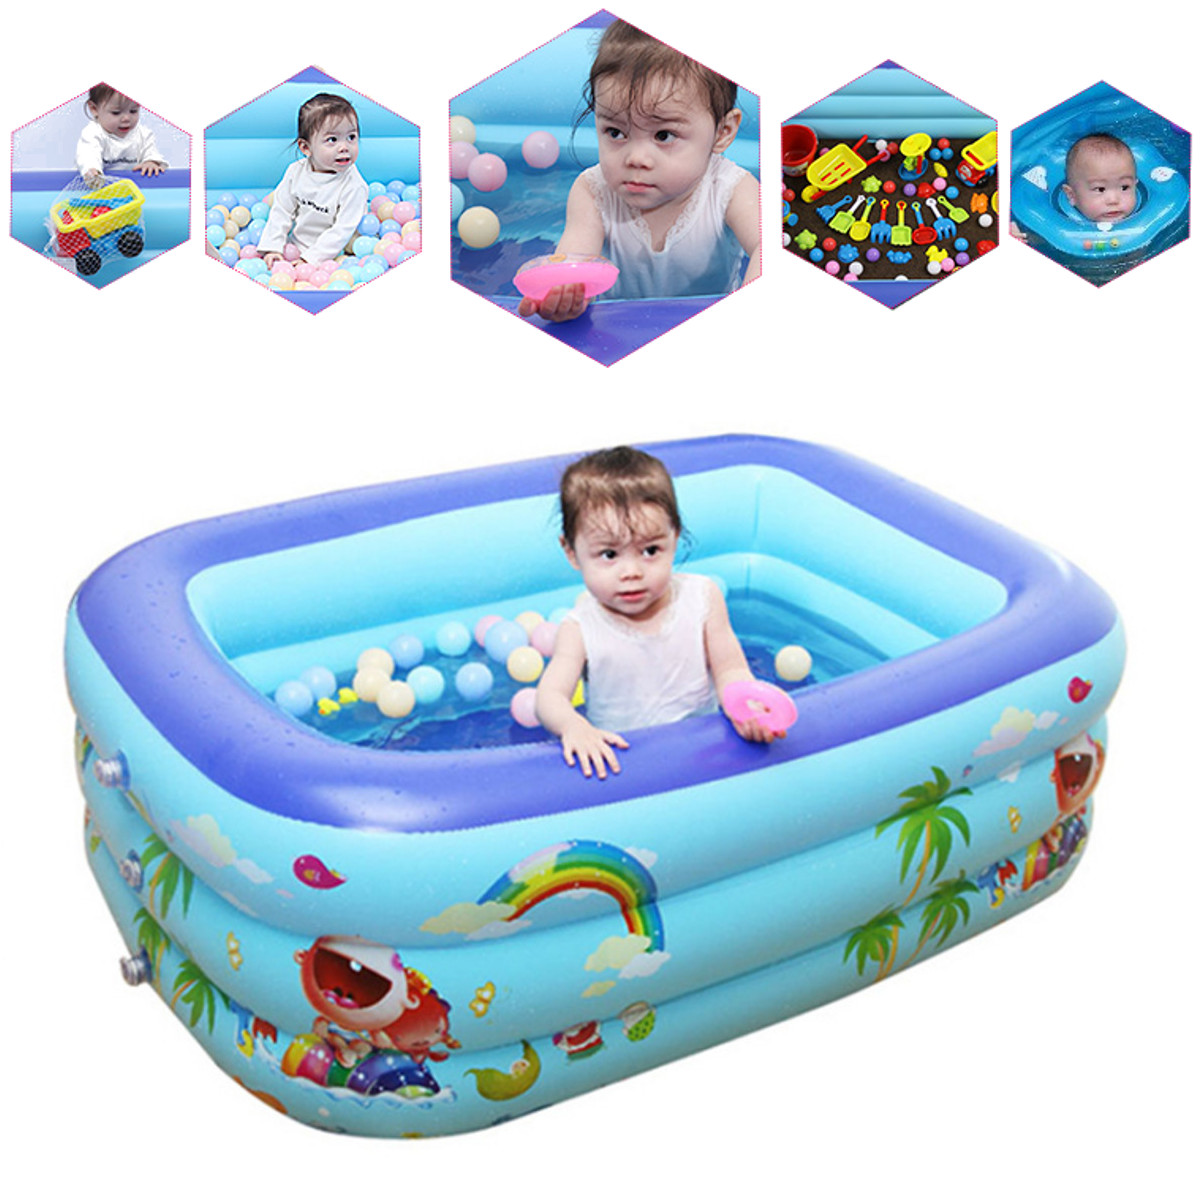 Inflatable-Swimming-Pool-Adults-Kids-Ocean-Ball-Pool-Bathing-Tub-Play-Water-Outdoor-Indoor-1706428-8